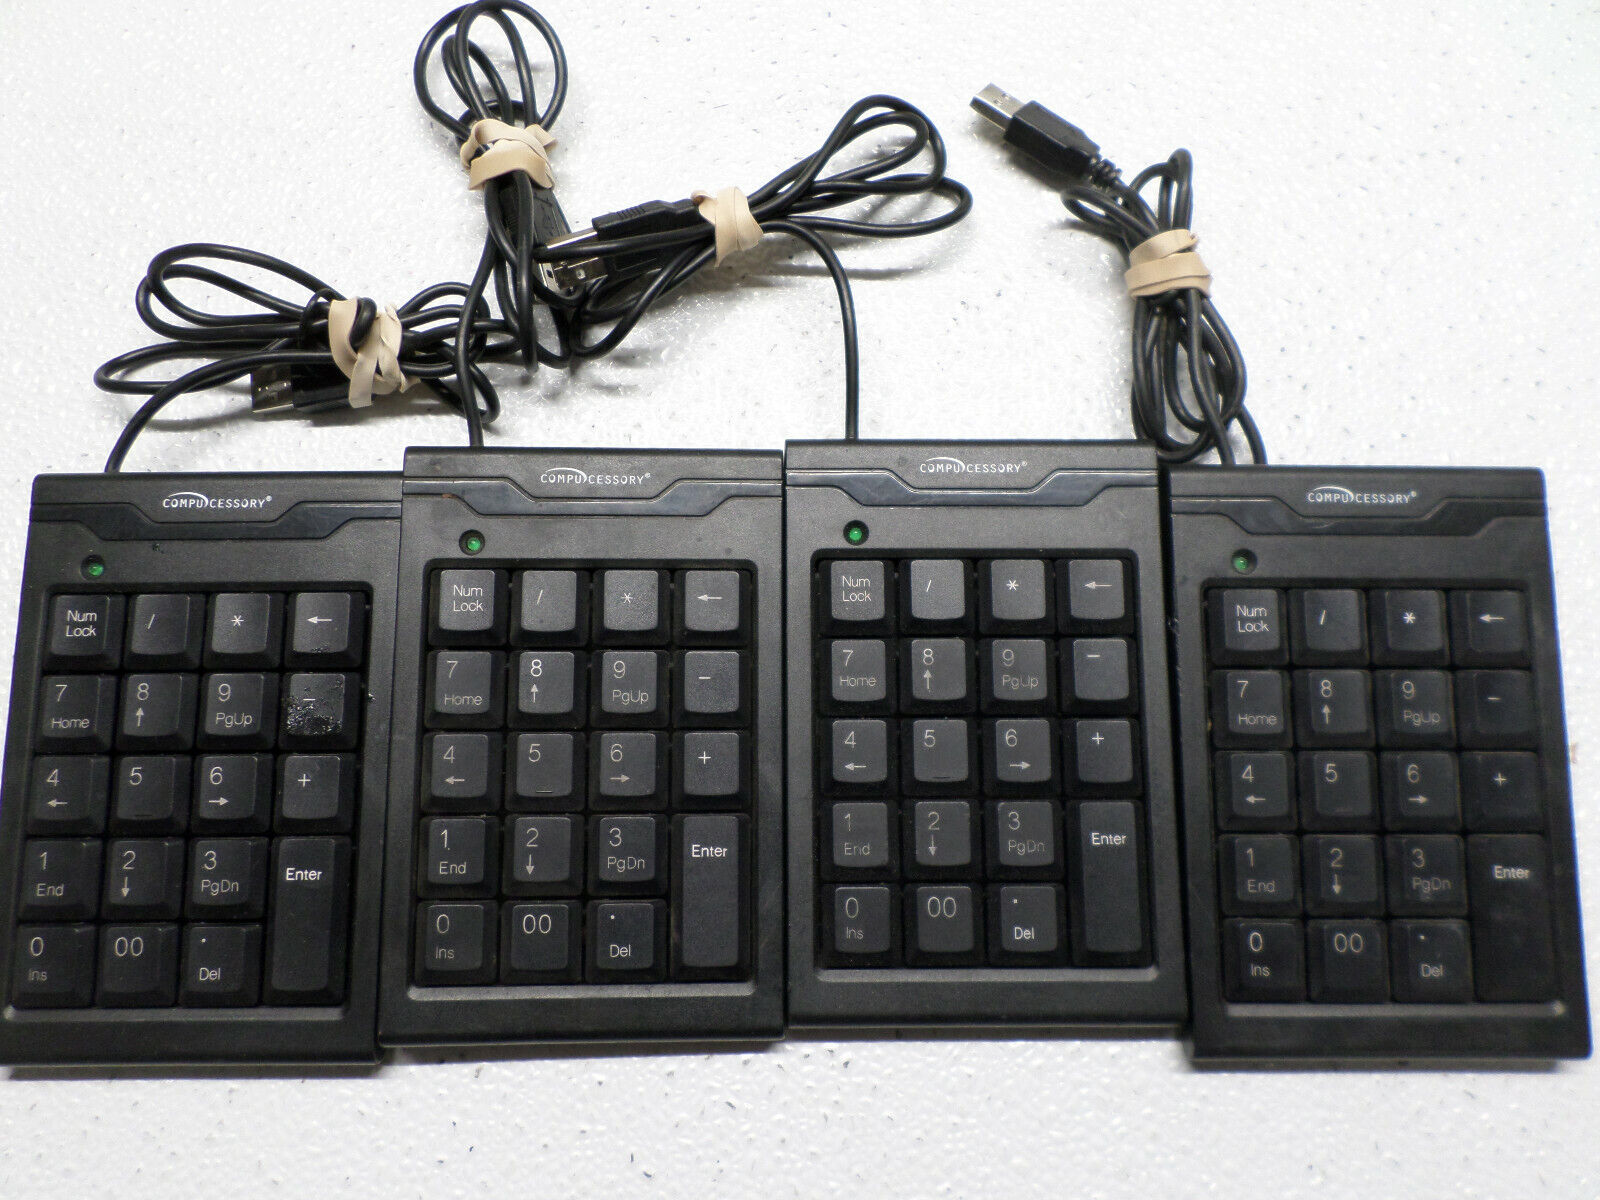 Lot of 4 Compucessory USB keypad, black, CCS 34222, 20 key